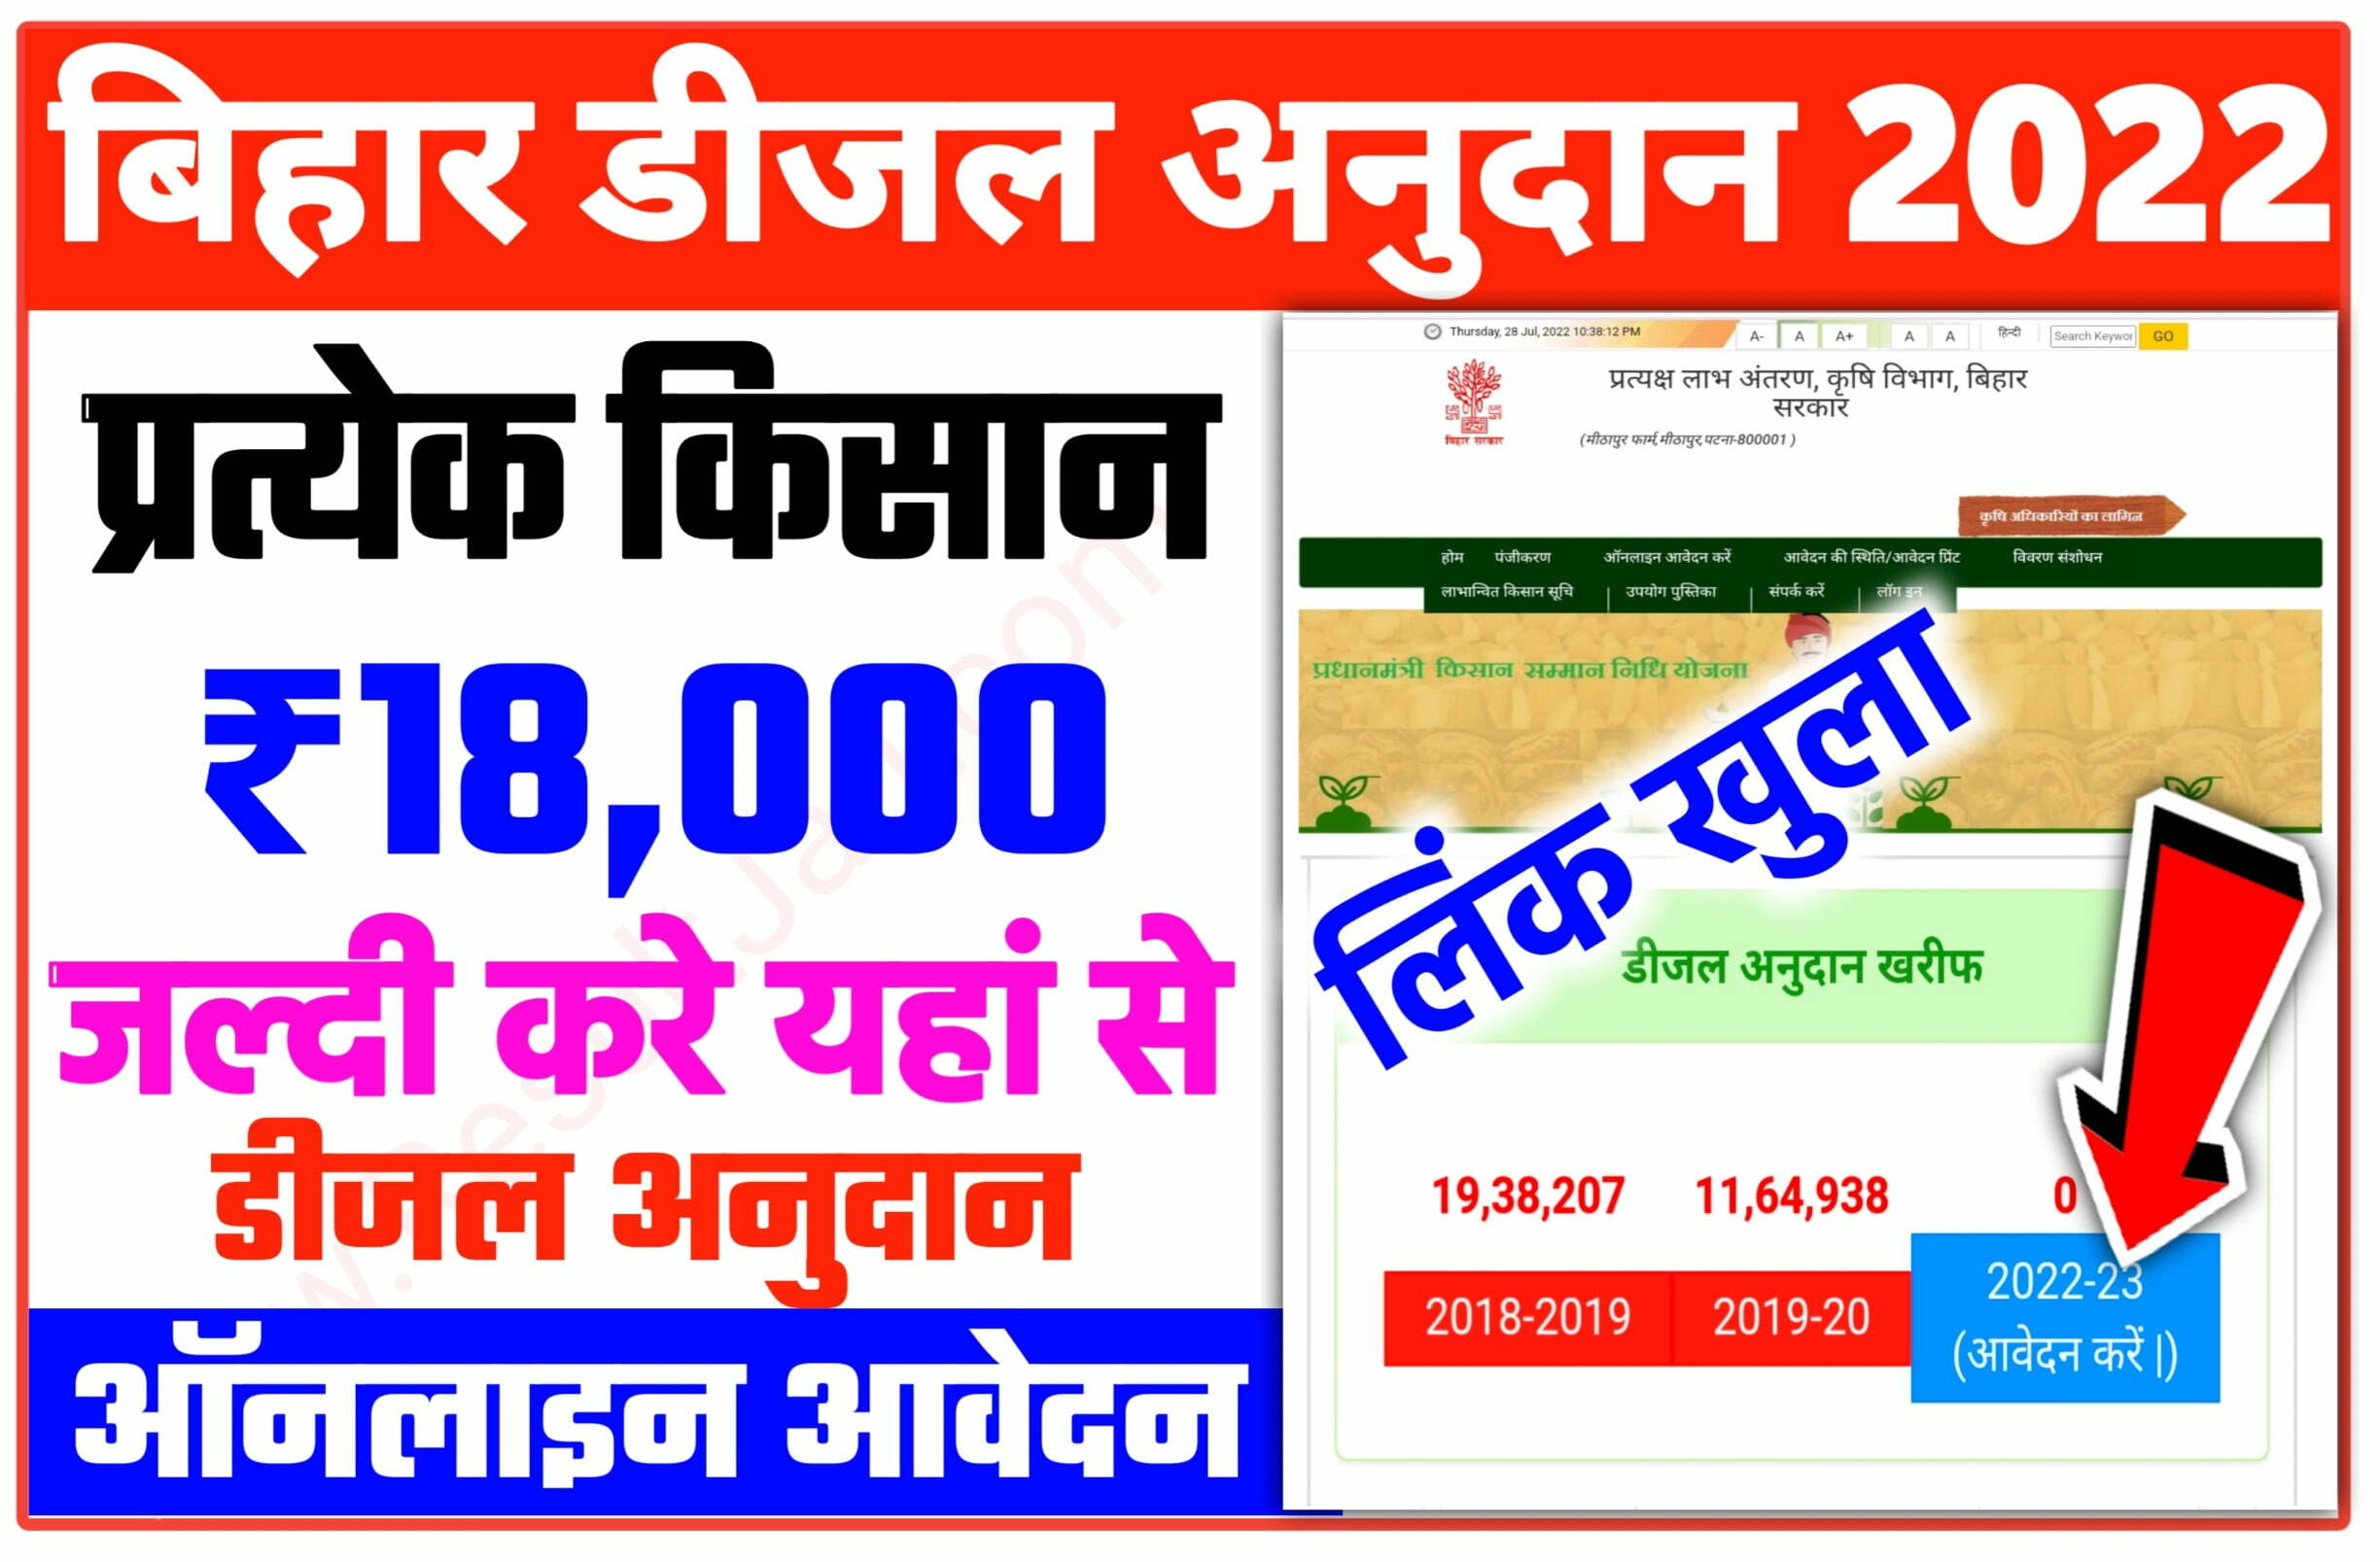 Bihar Diesel Anudan Yojana Online Apply 2022 - बिहार अनुदान योजना ऑनलाइन फॉर्म 2022 शुरू मिलेगा ₹14000 तक अनुदान